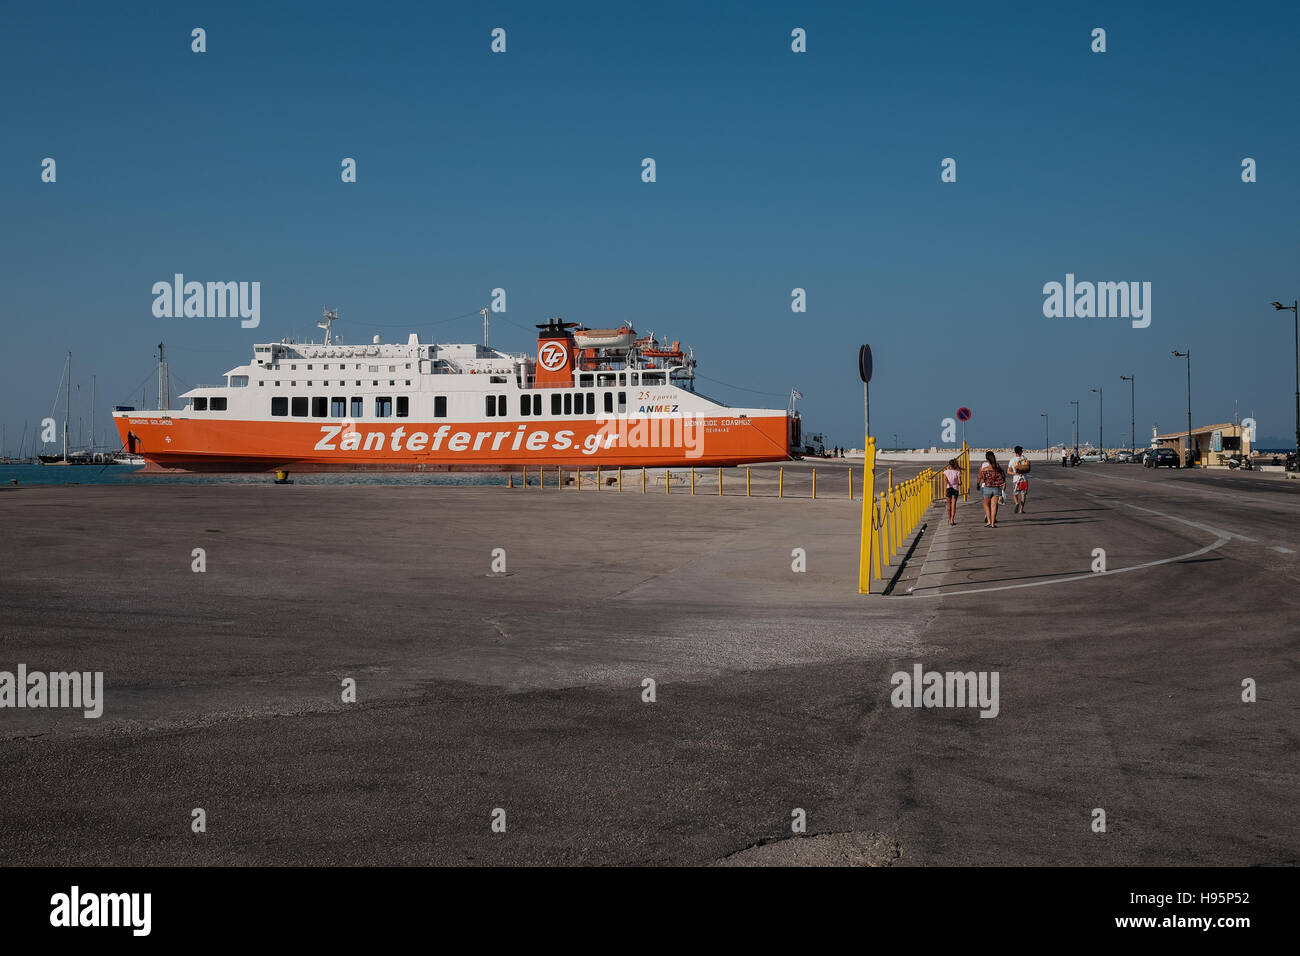 Zante car Ferries in Dock at Zante town port Stock Photo